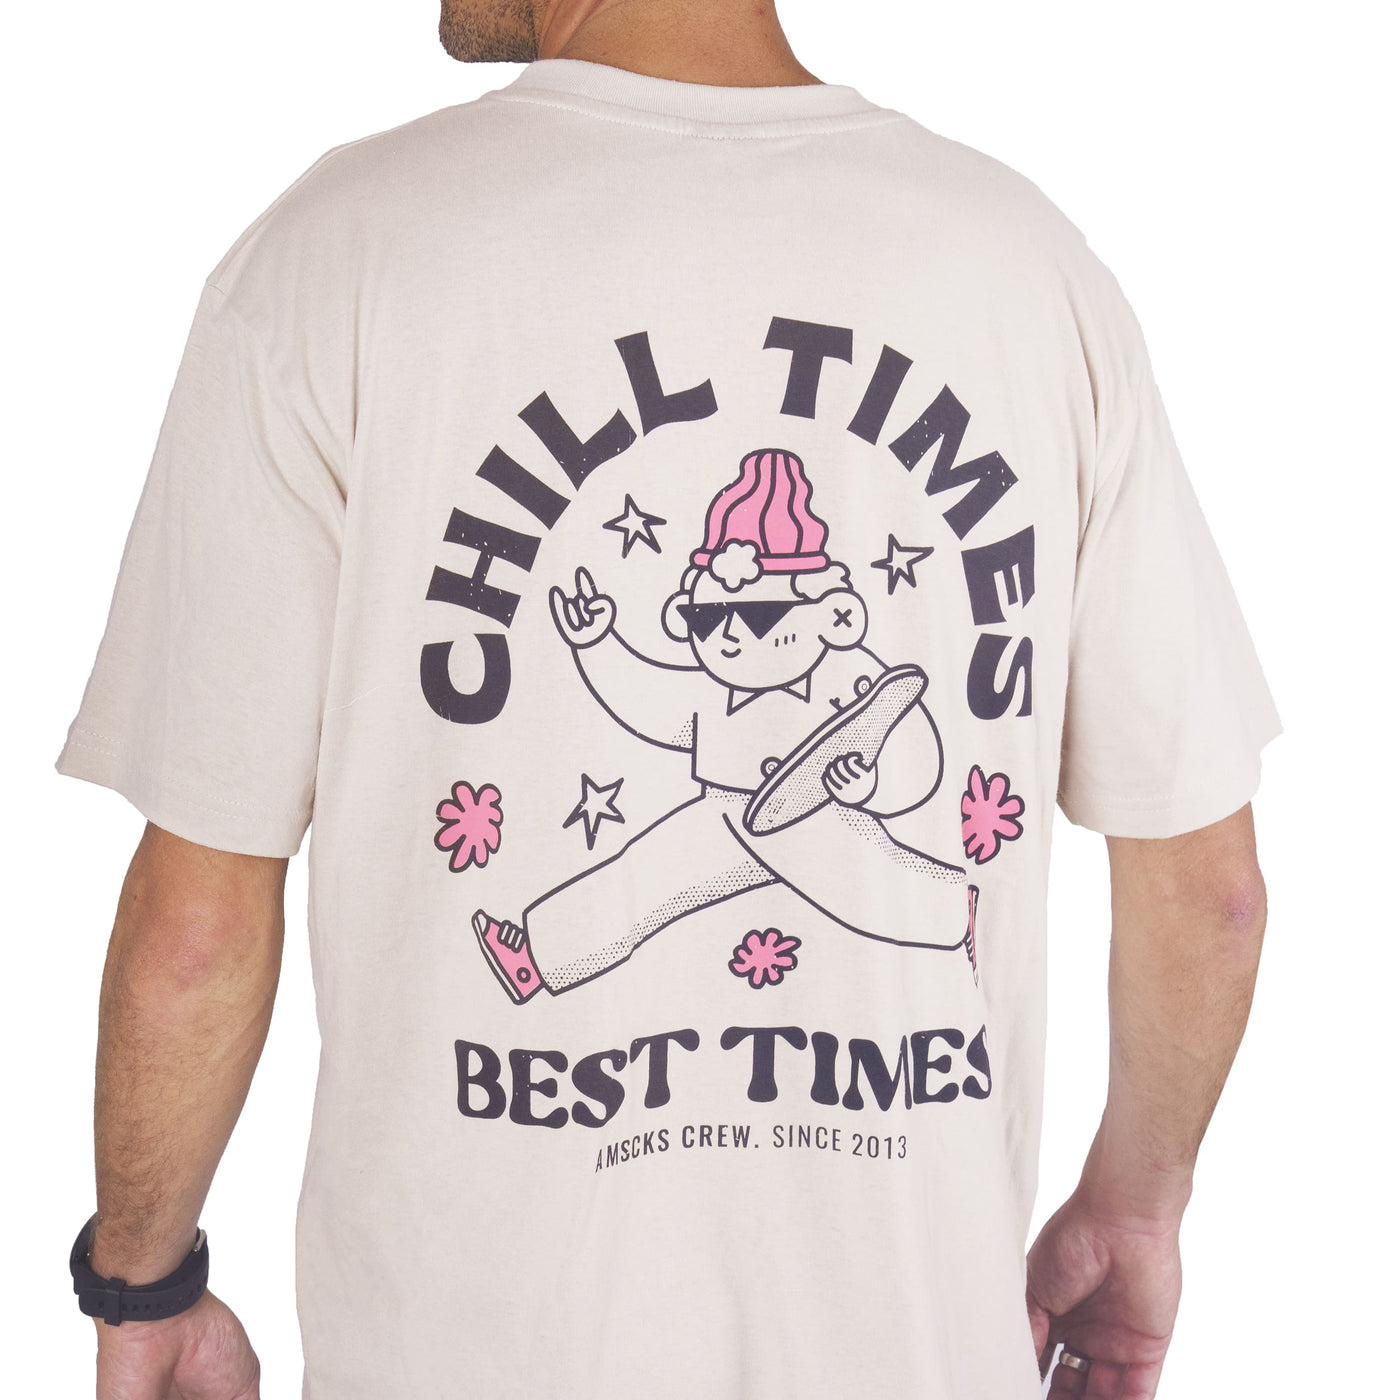 Chill Times - Camiseta